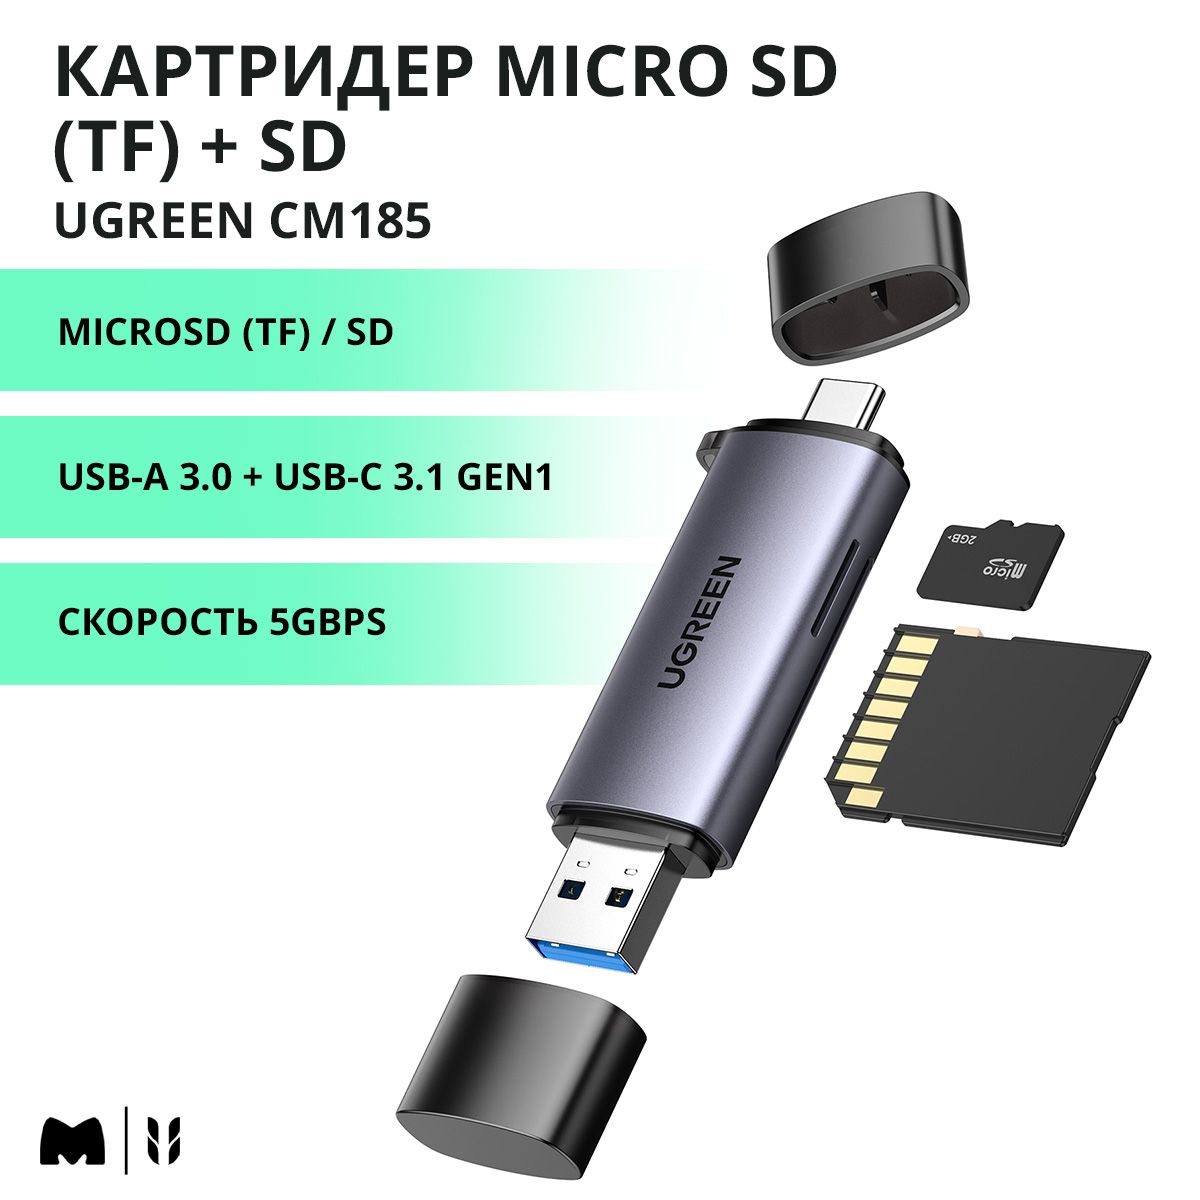 КартридерMicroSD(TF)+SDUGREENCM185/USB-A3.0+USB-C3.1Gen1/Скорость5Gbps/цветсерыйкосмос(50706)